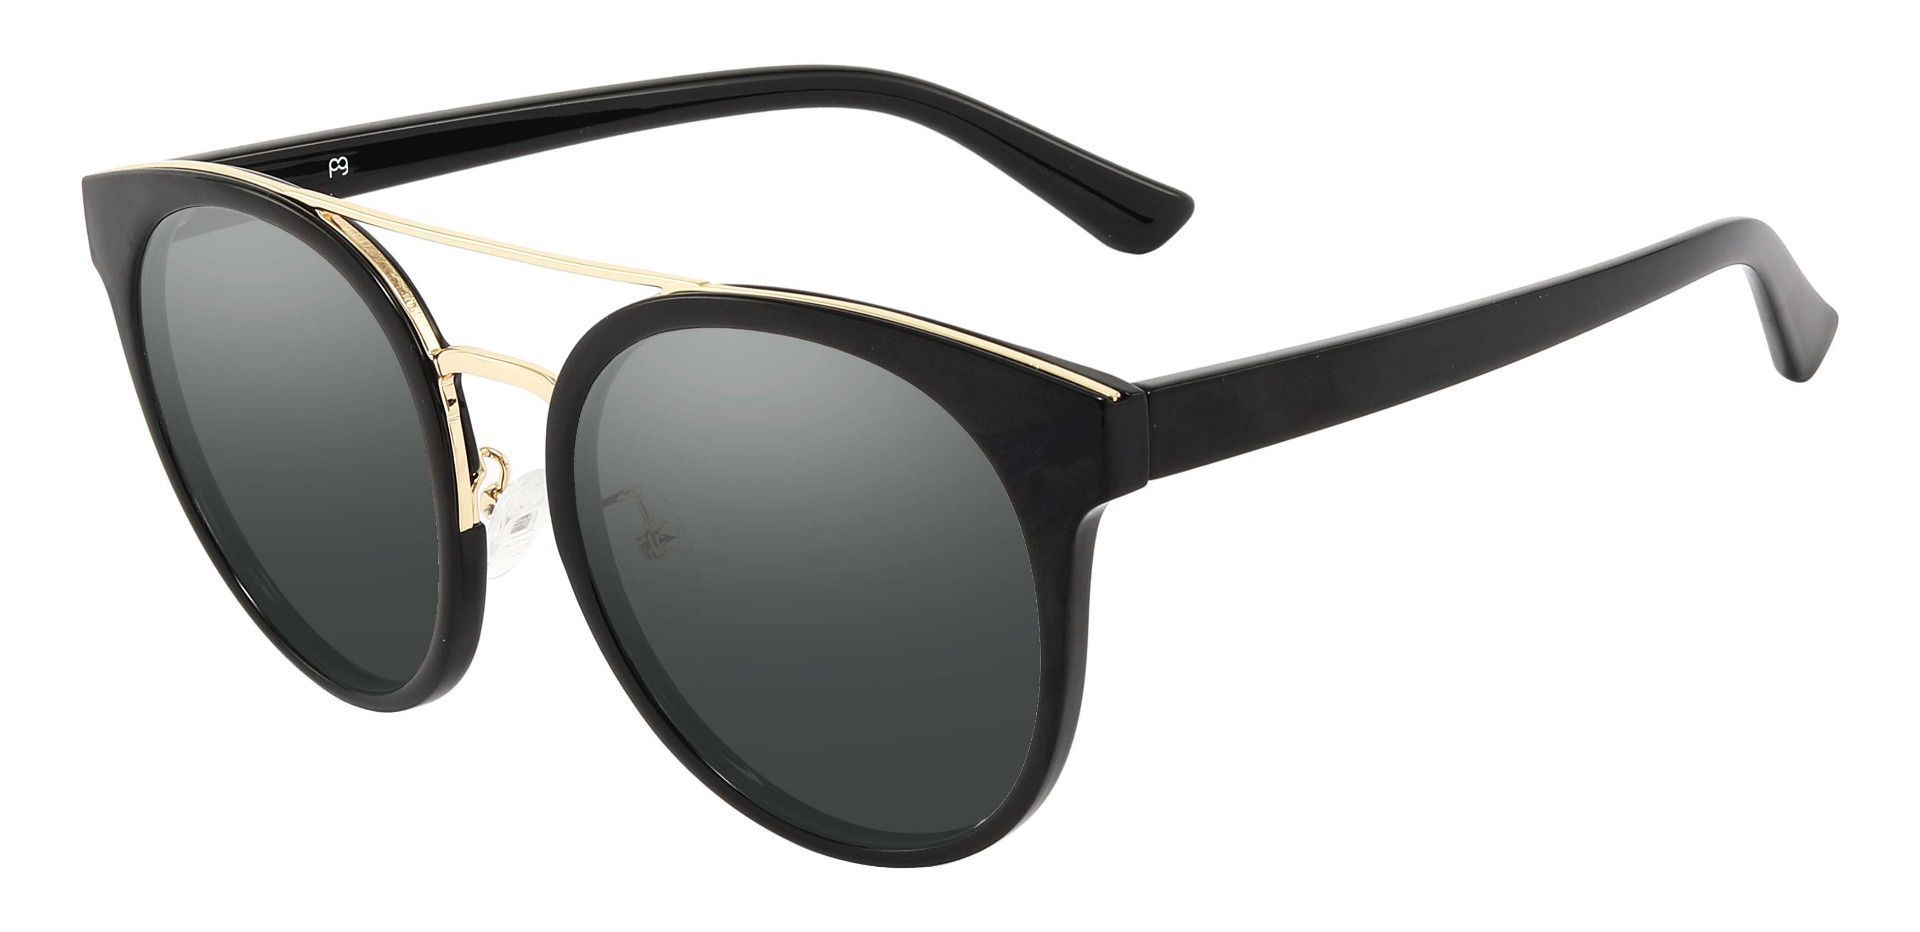 Oasis Aviator Prescription Sunglasses - Black Frame With Gray Lenses